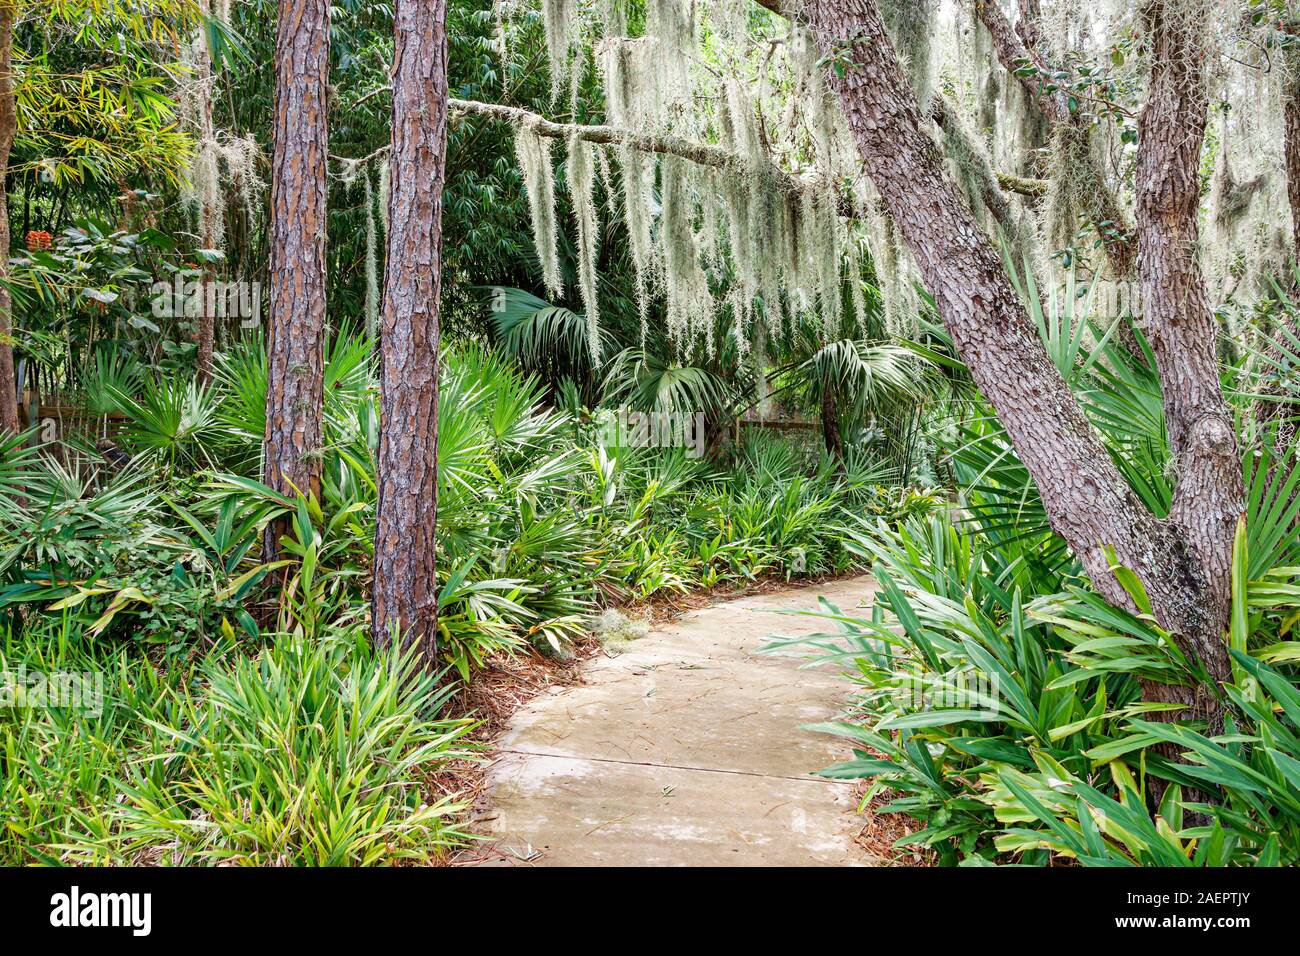 Port St. Saint Lucie Florida, Port St. Lucie Botanical Gardens, Gehweg, moos drapierter Baum, Vegetation, FL190920031 Stockfoto